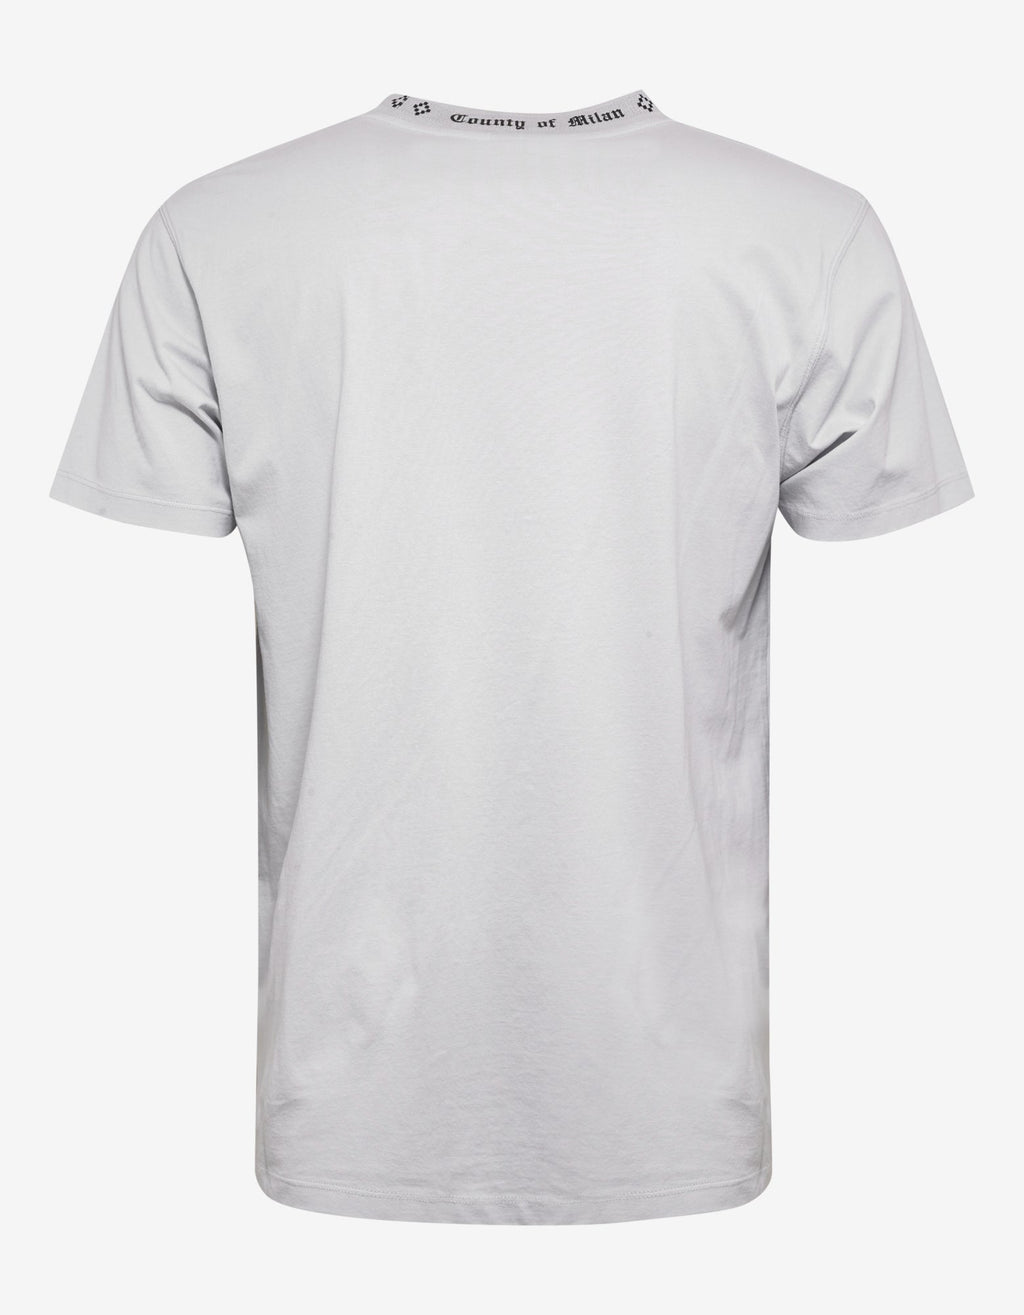 Marcelo Burlon MB Print Grey T-Shirt